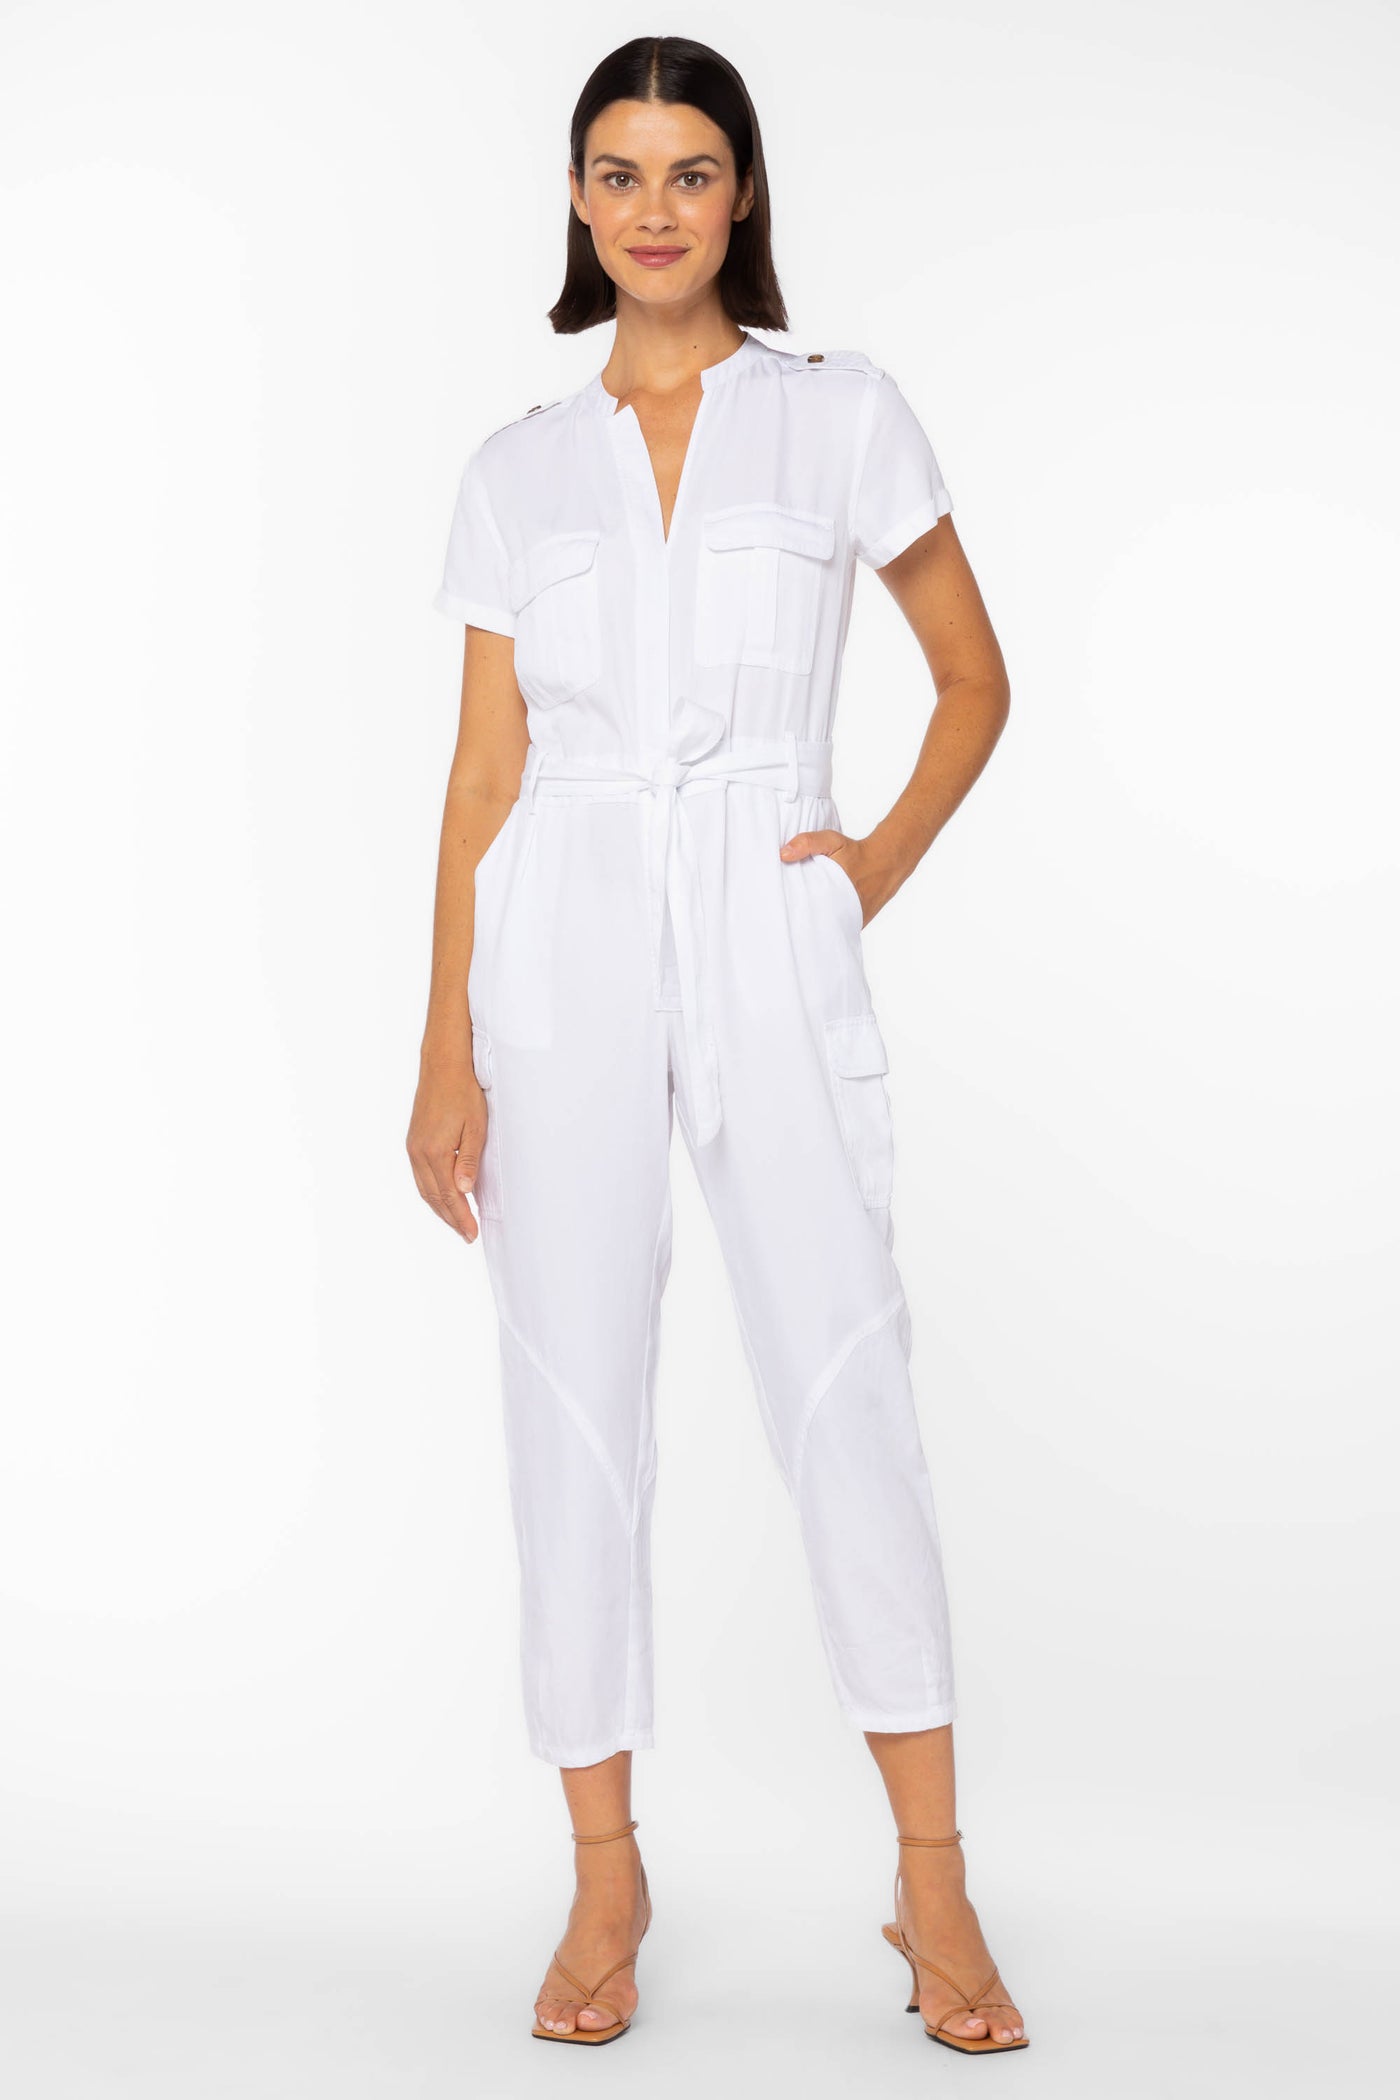 Greyson White Jumpsuit - Jumpsuits & Rompers - Velvet Heart Clothing